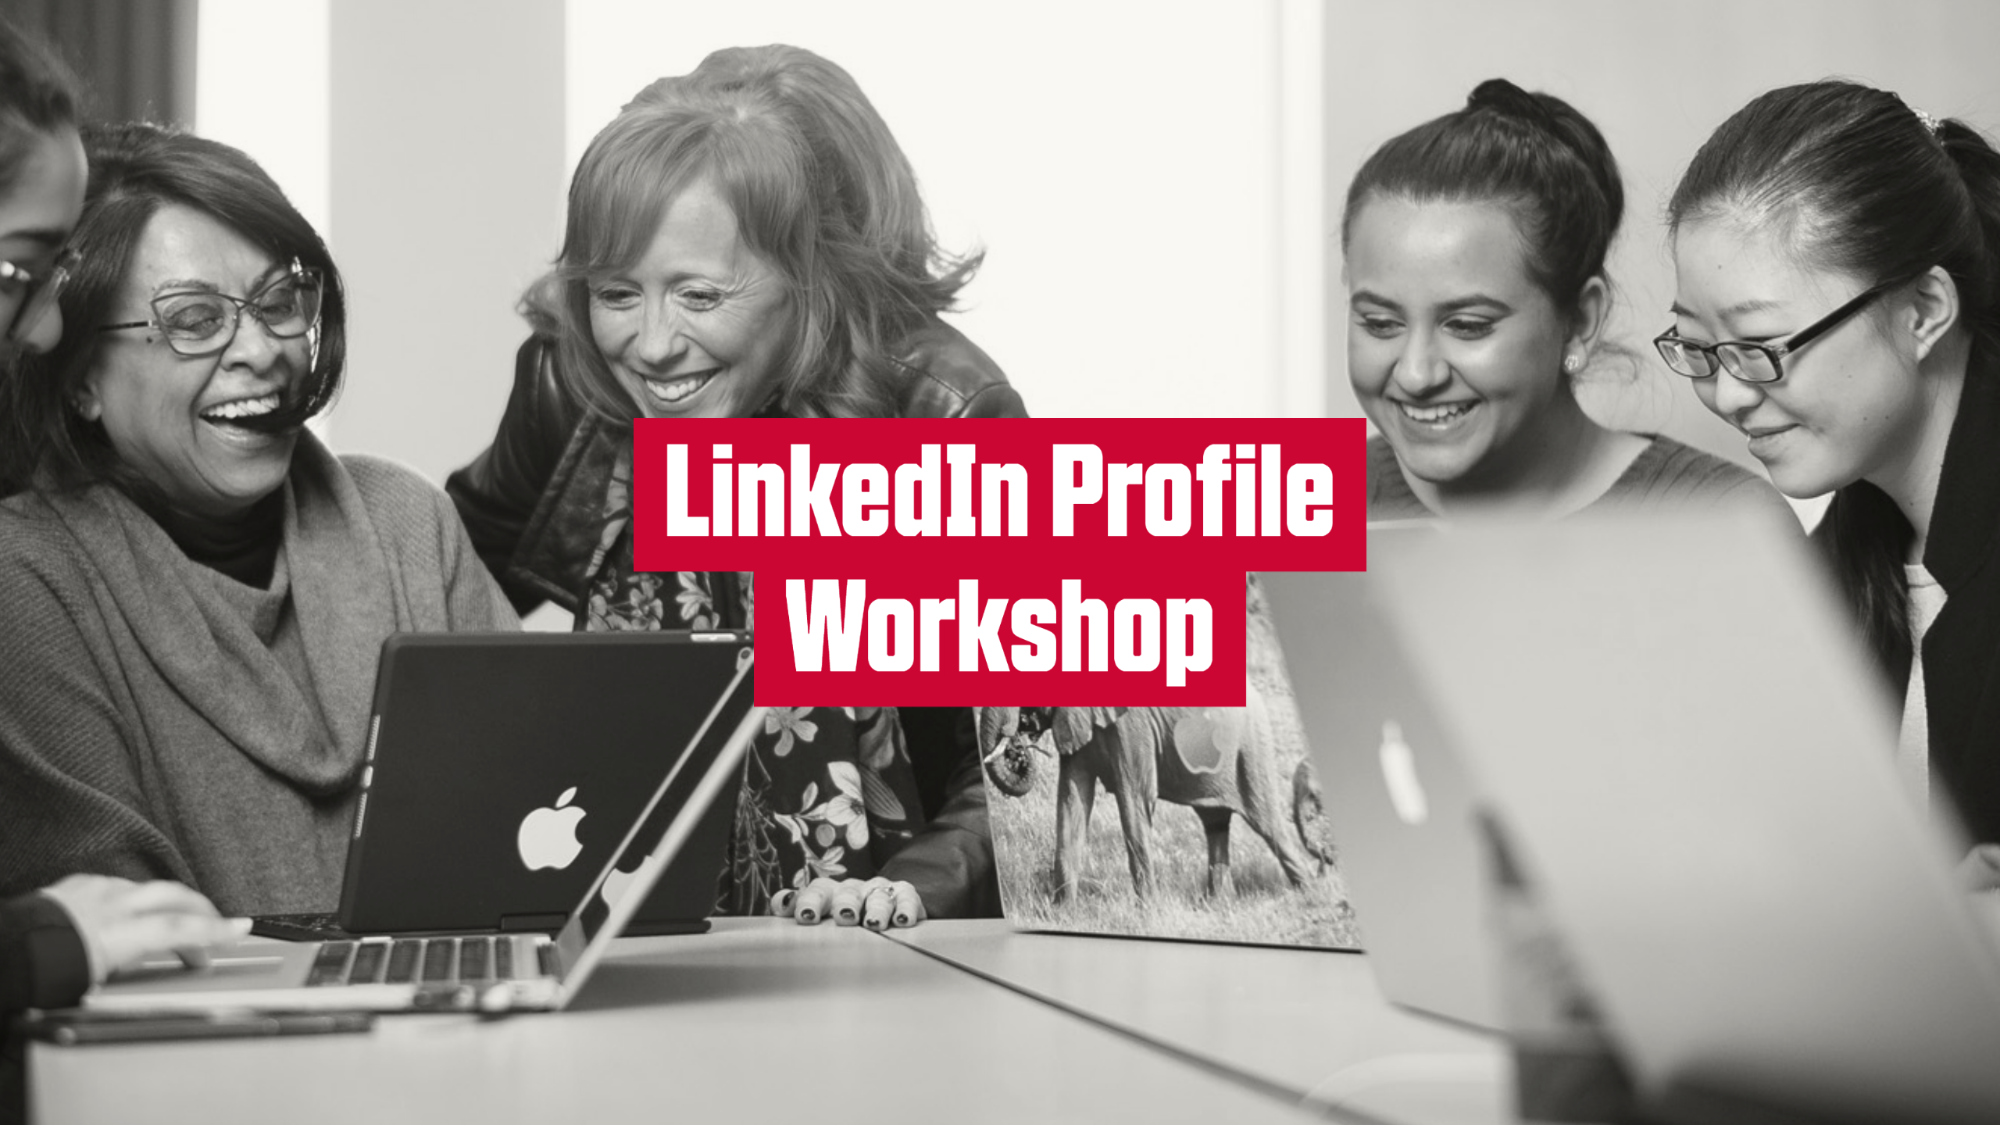 Friday, Feb 3: LinkedIn Profile Workshop